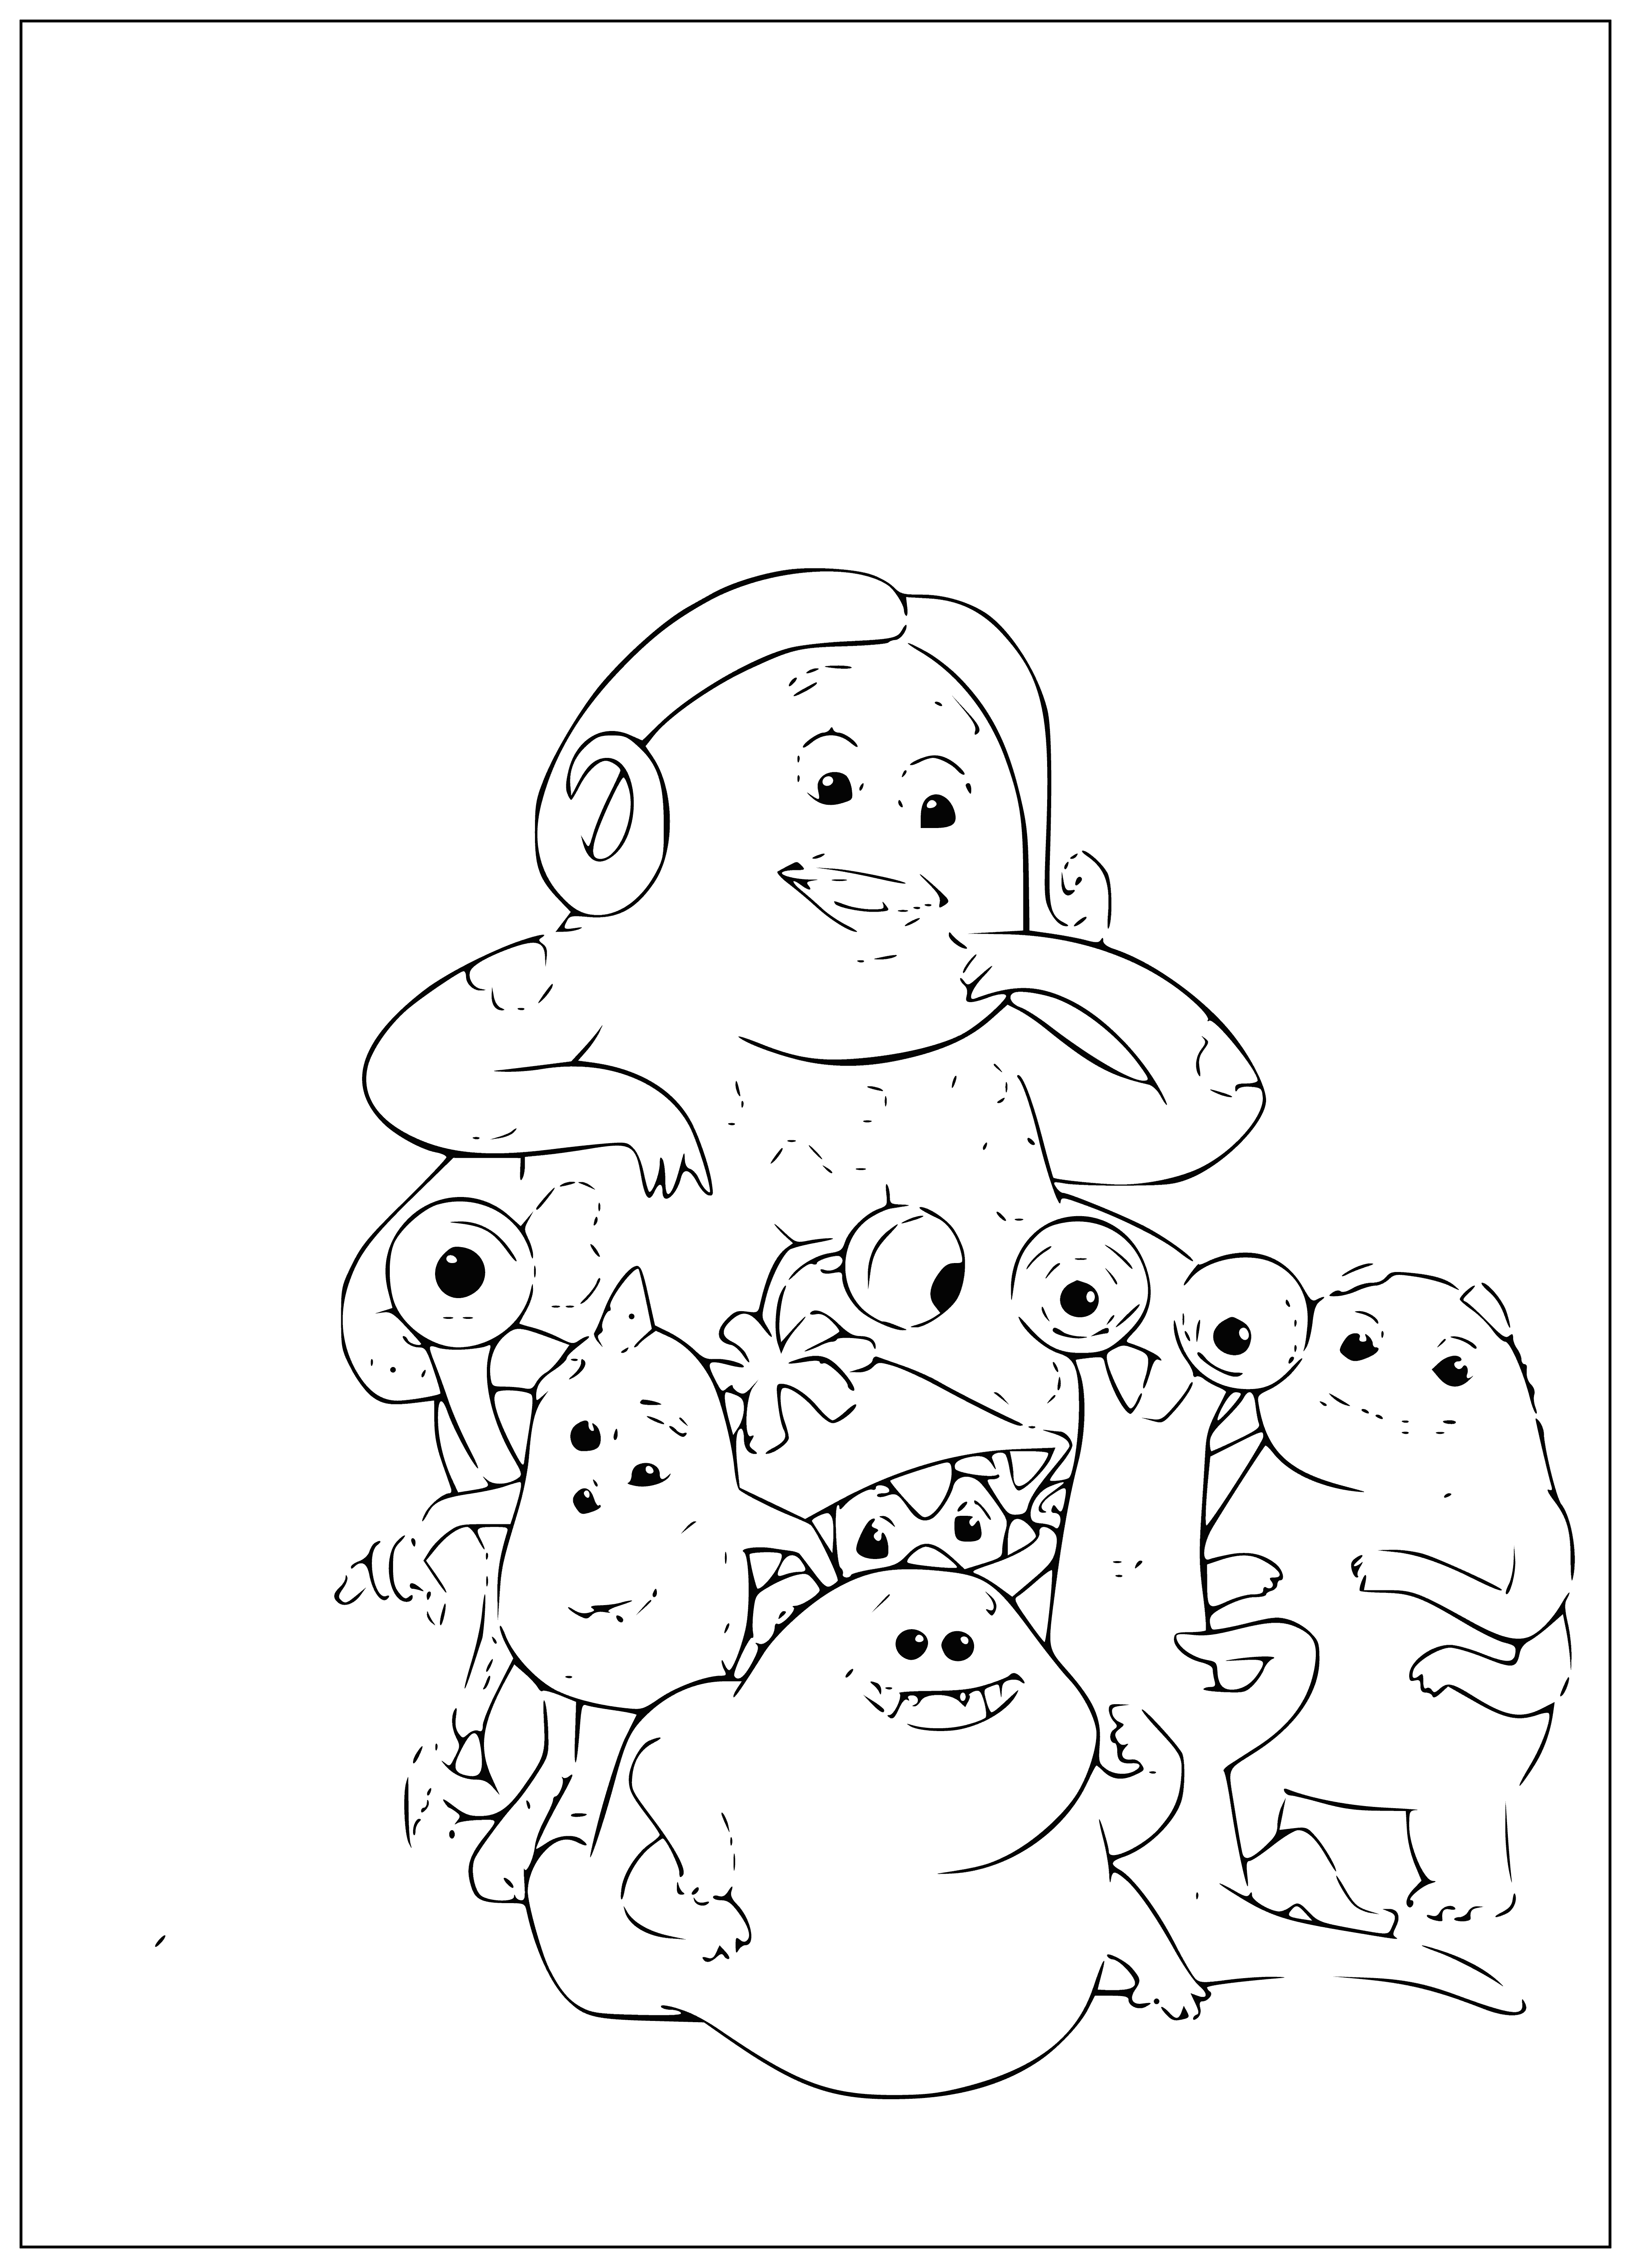 Monsters kindergarten coloring page